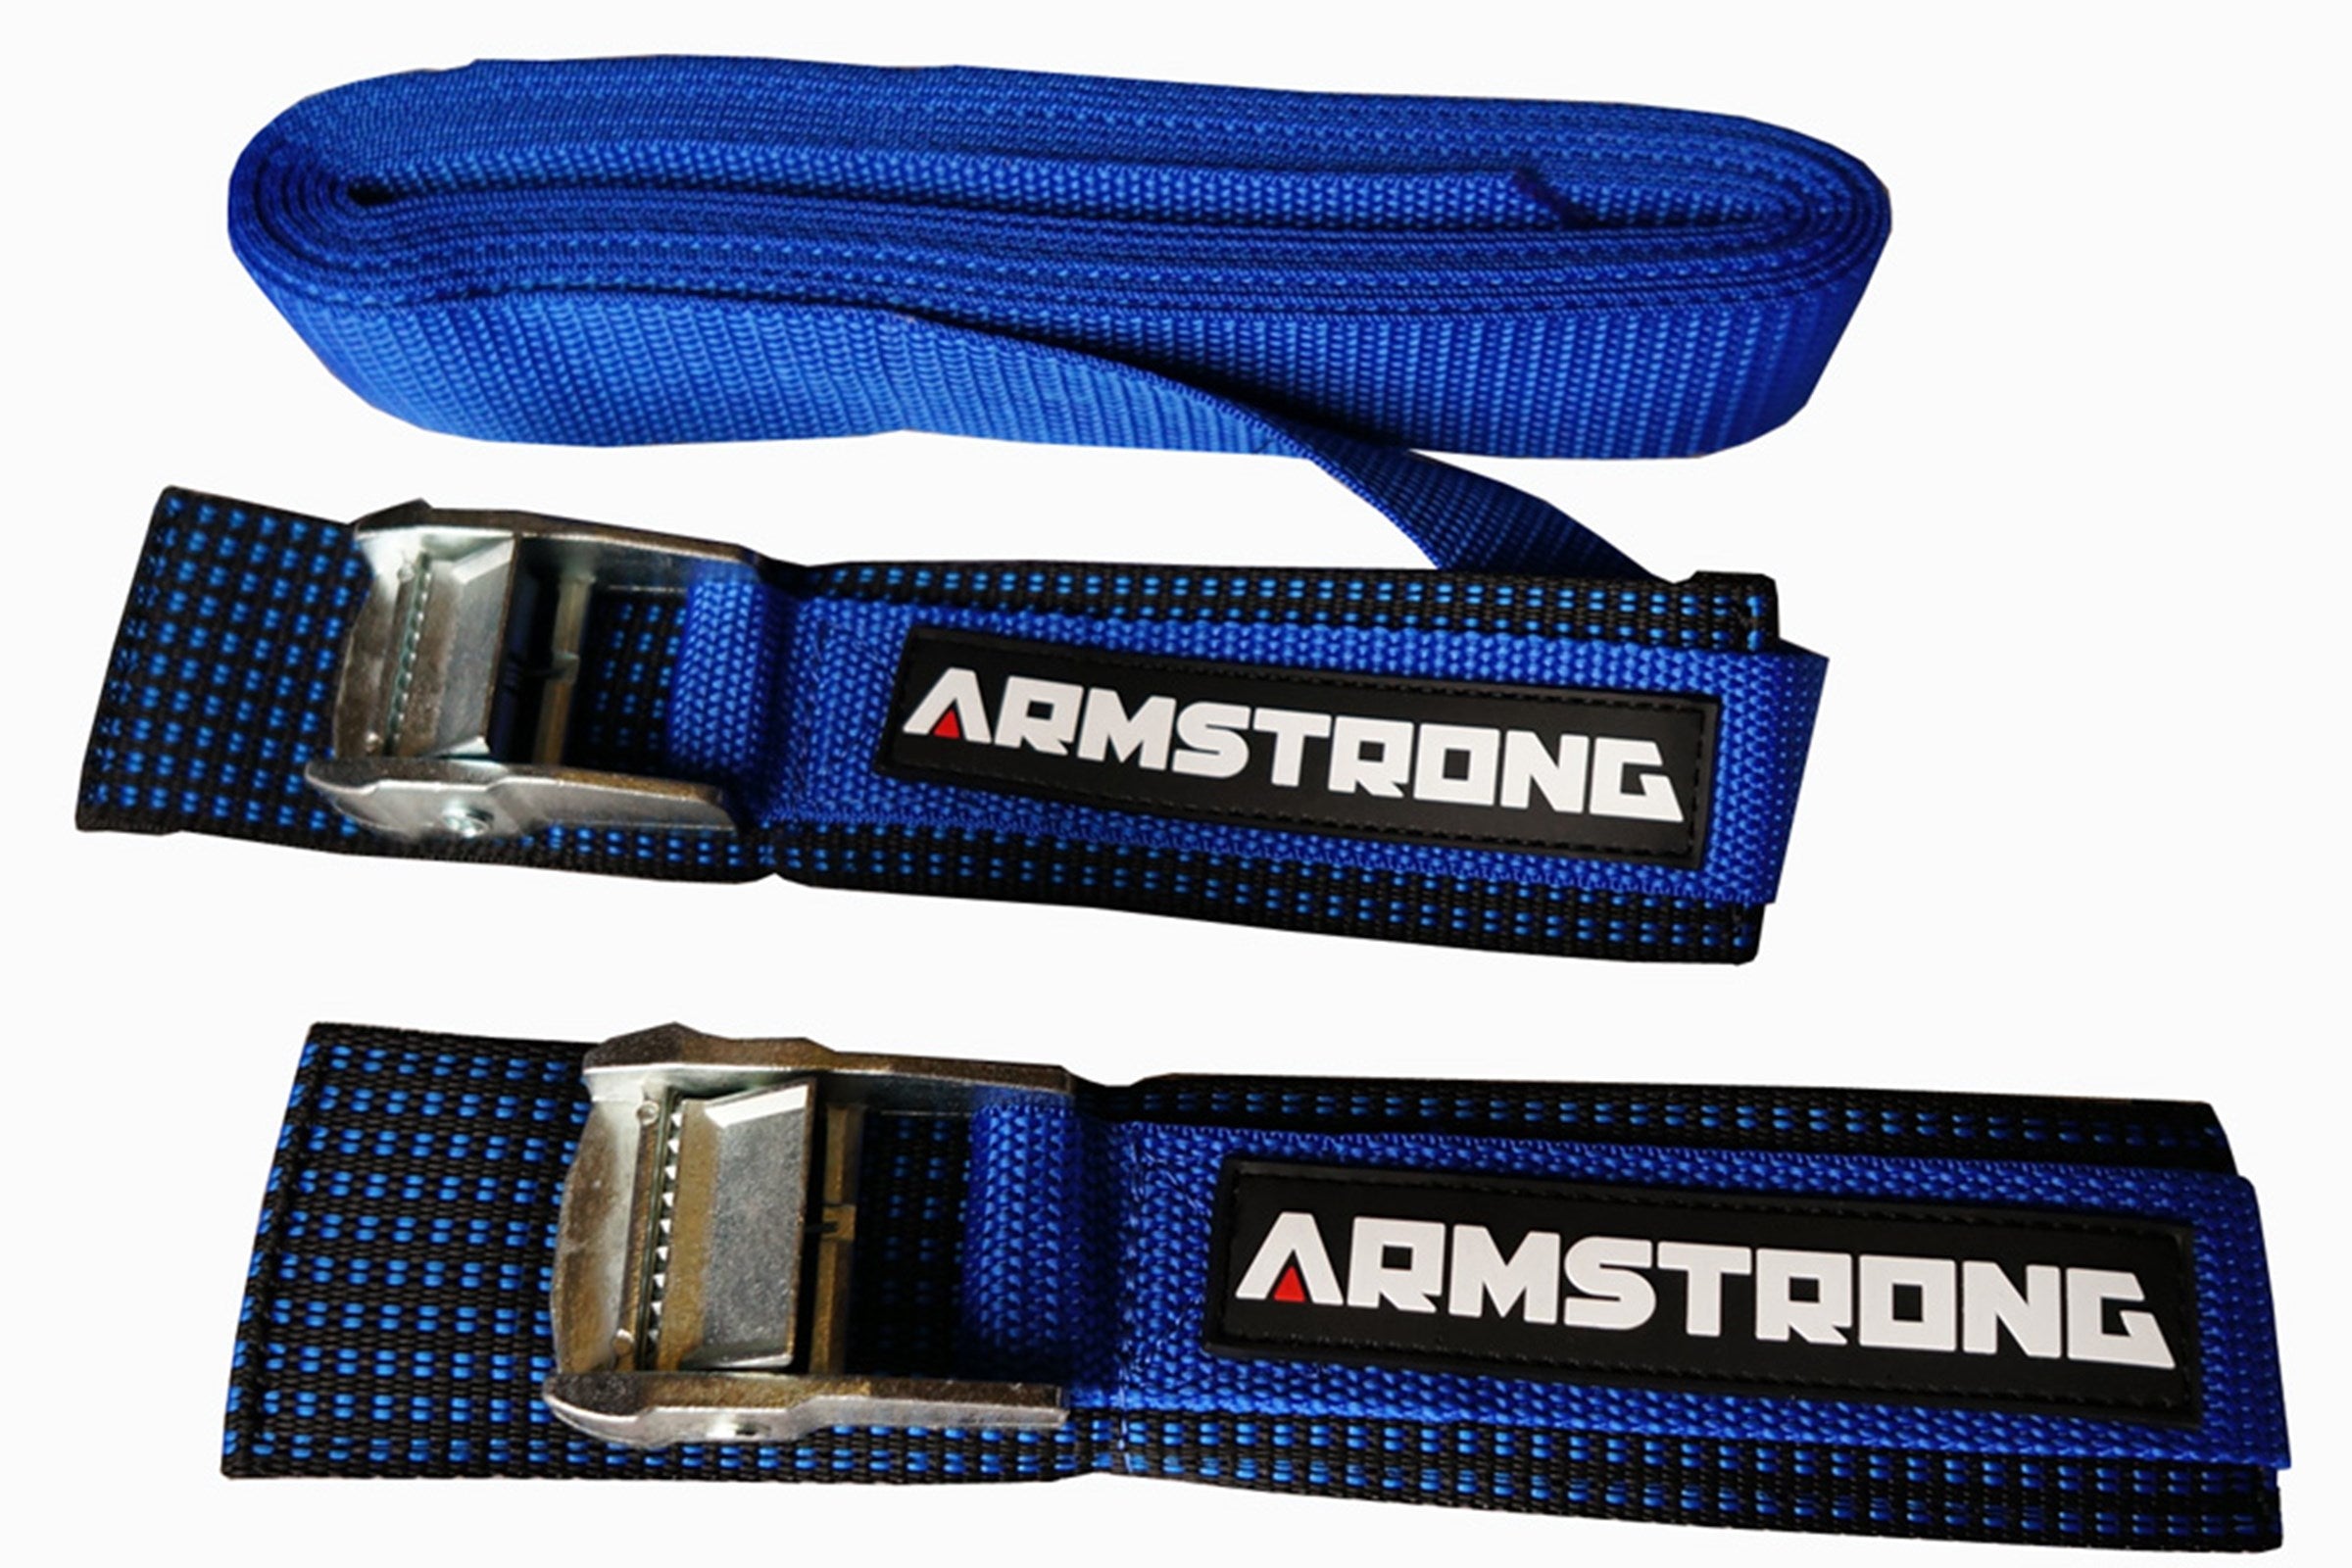 Armstrong spännband